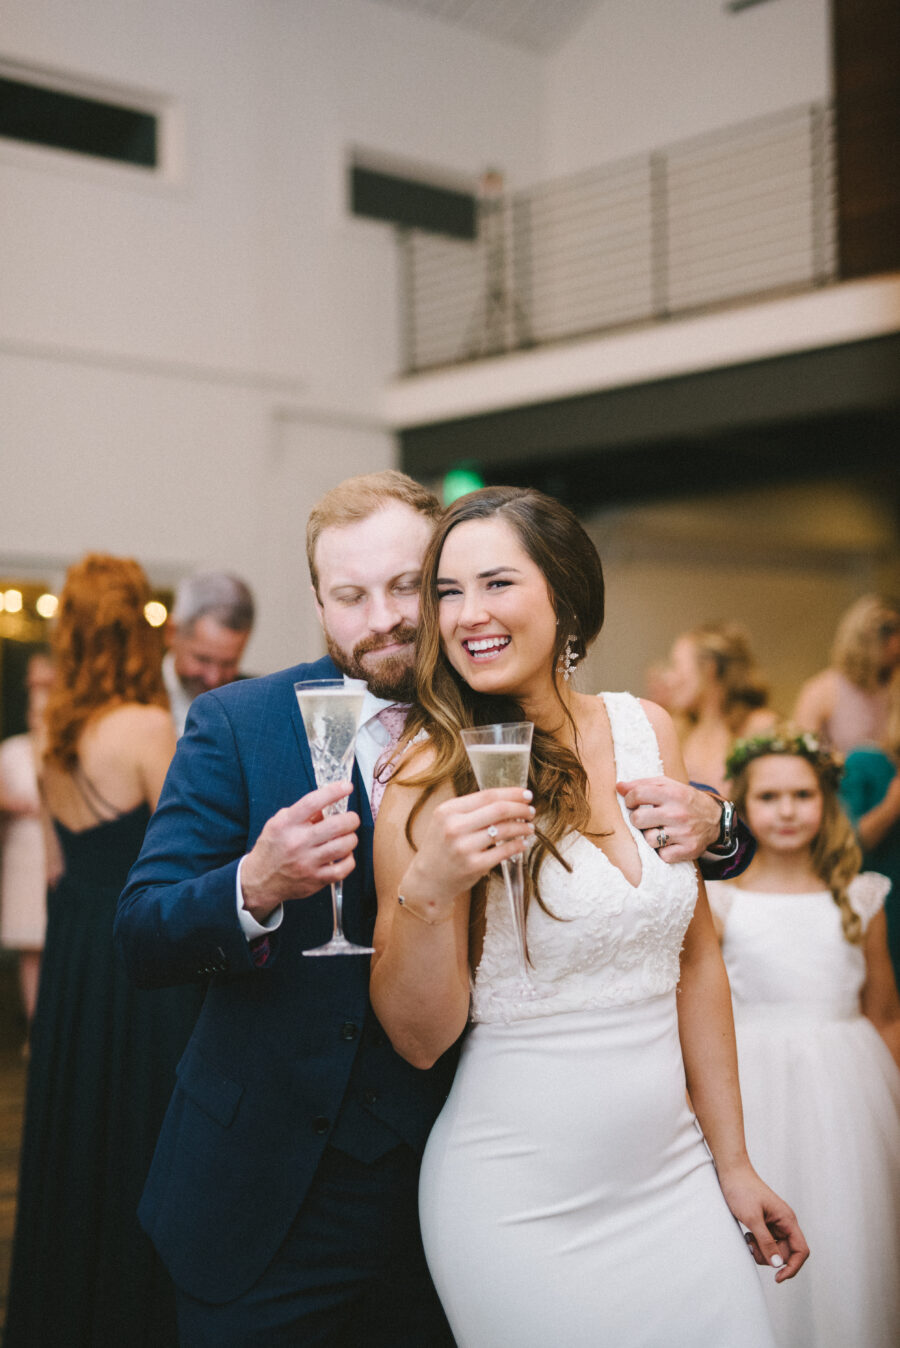 Kera Photography | Nashville Bride Guide